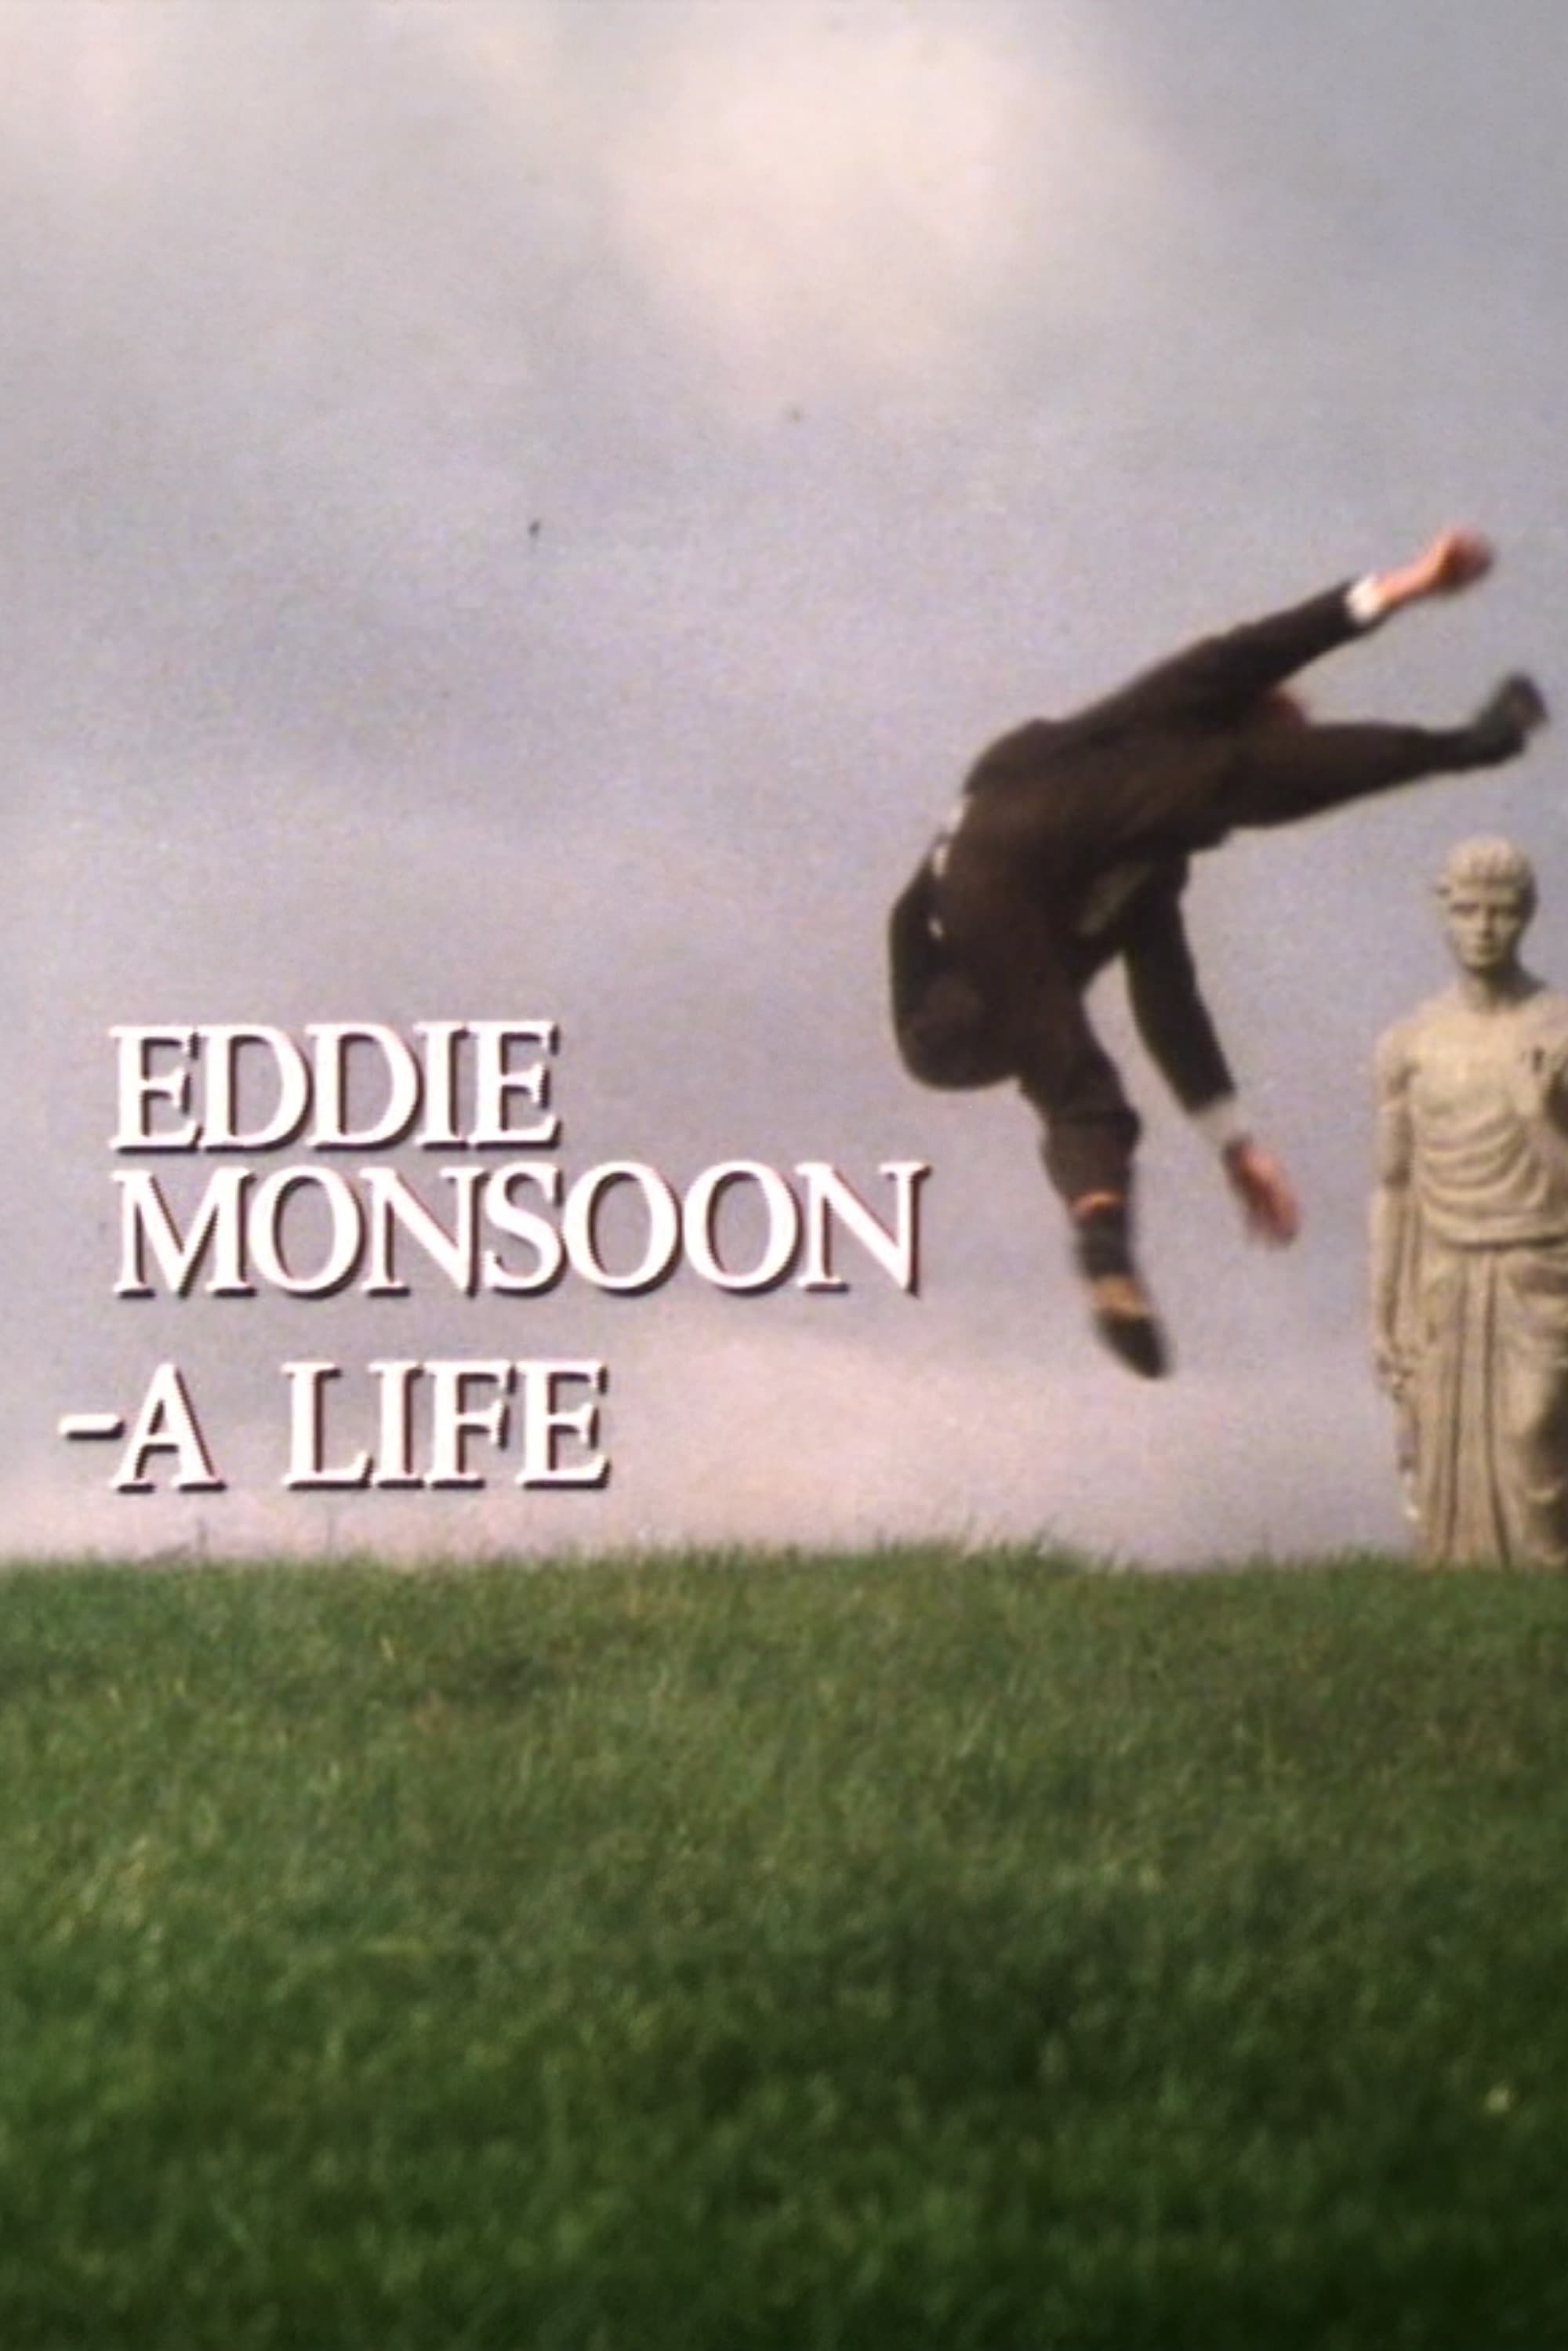 Eddie Monsoon - a Life?